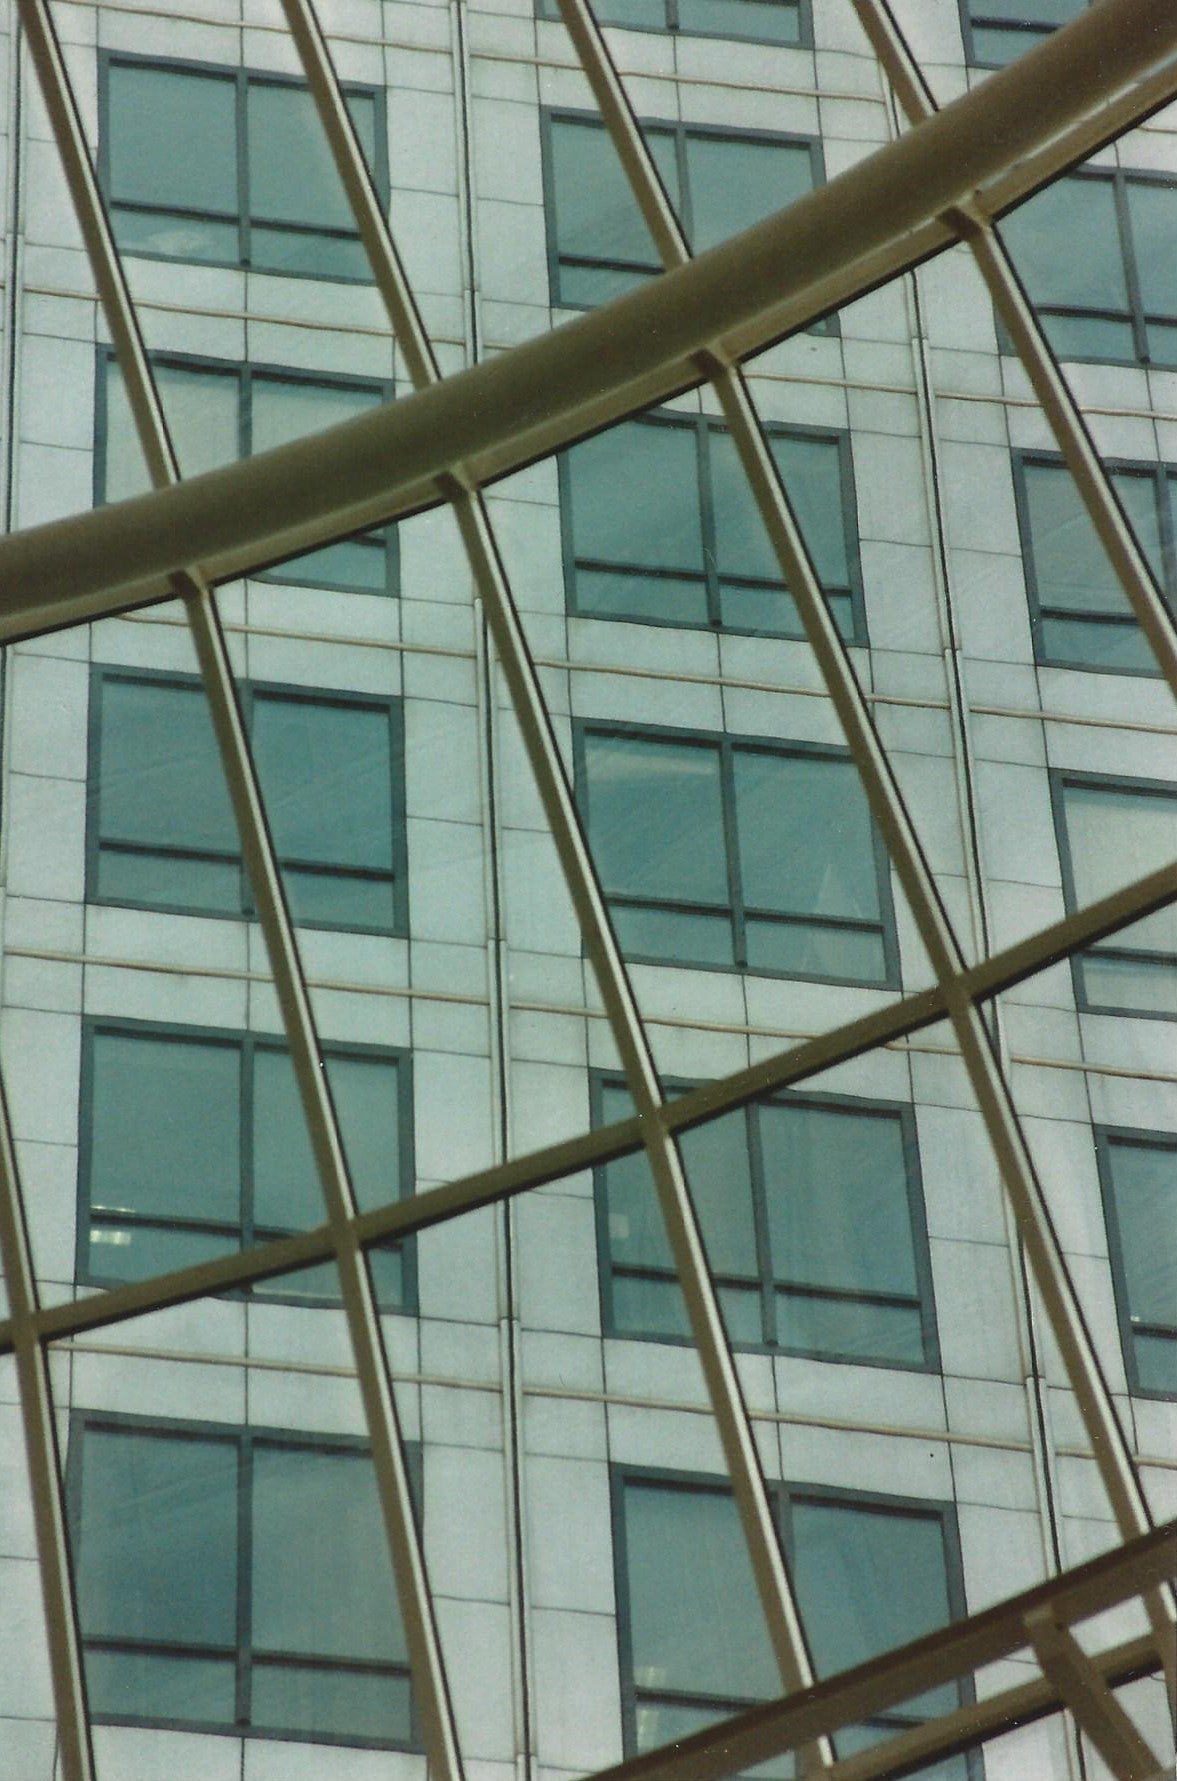 Canary Wharf windows photograph Reginald Beer